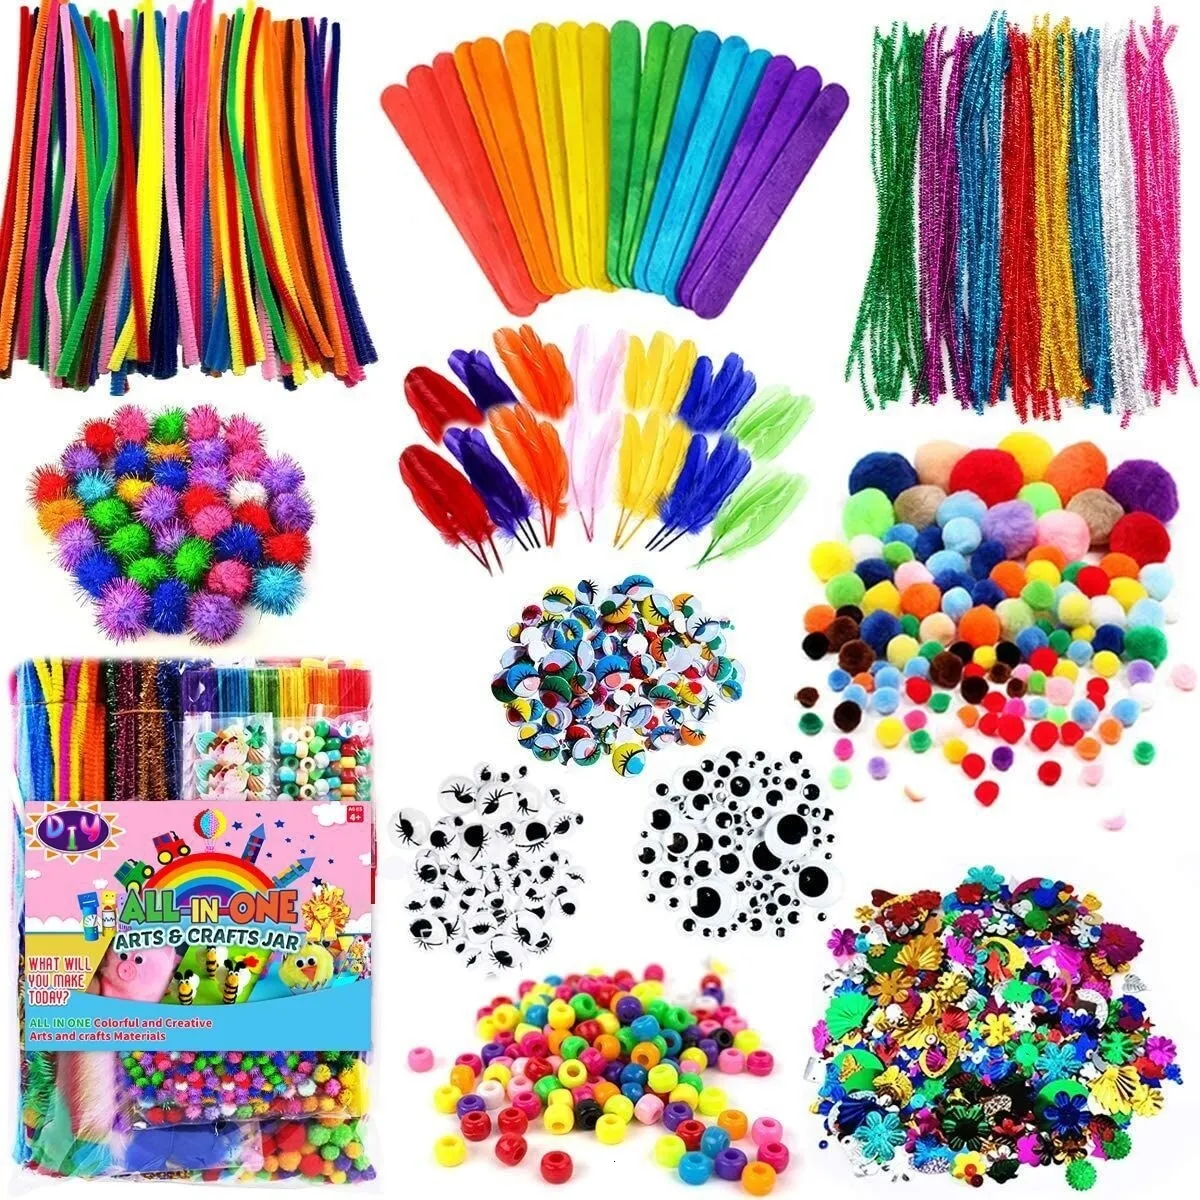 Konst och hantverk 1000pcs DIY Colorful Plush Stick Feather Foam Flowers Party Supplies Home Art Craft Kit Creative Presents for Boys and Girls 230925